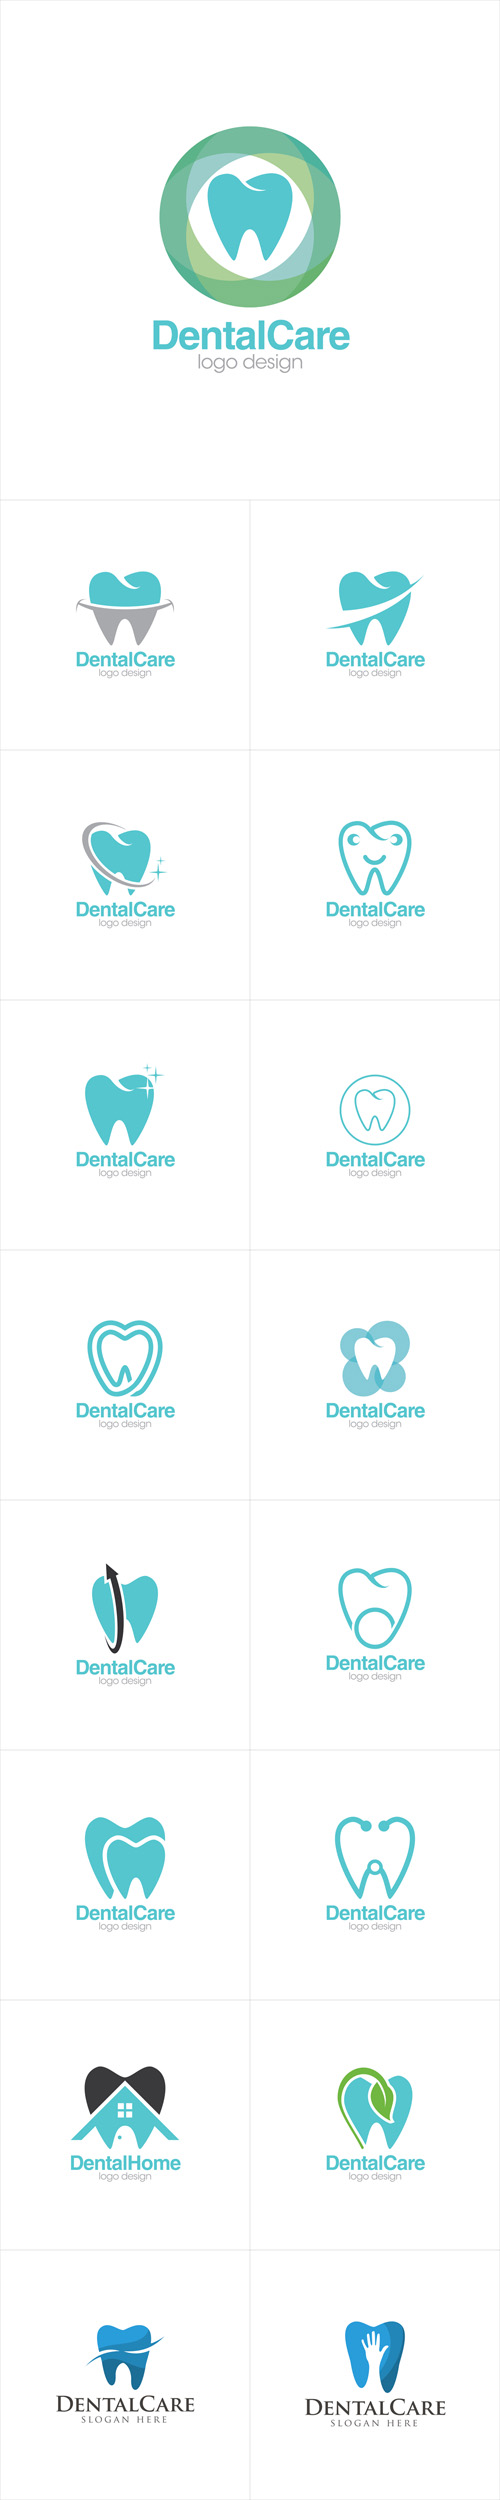 Vectors - Dental Care Creative Concept Logo Design Templates